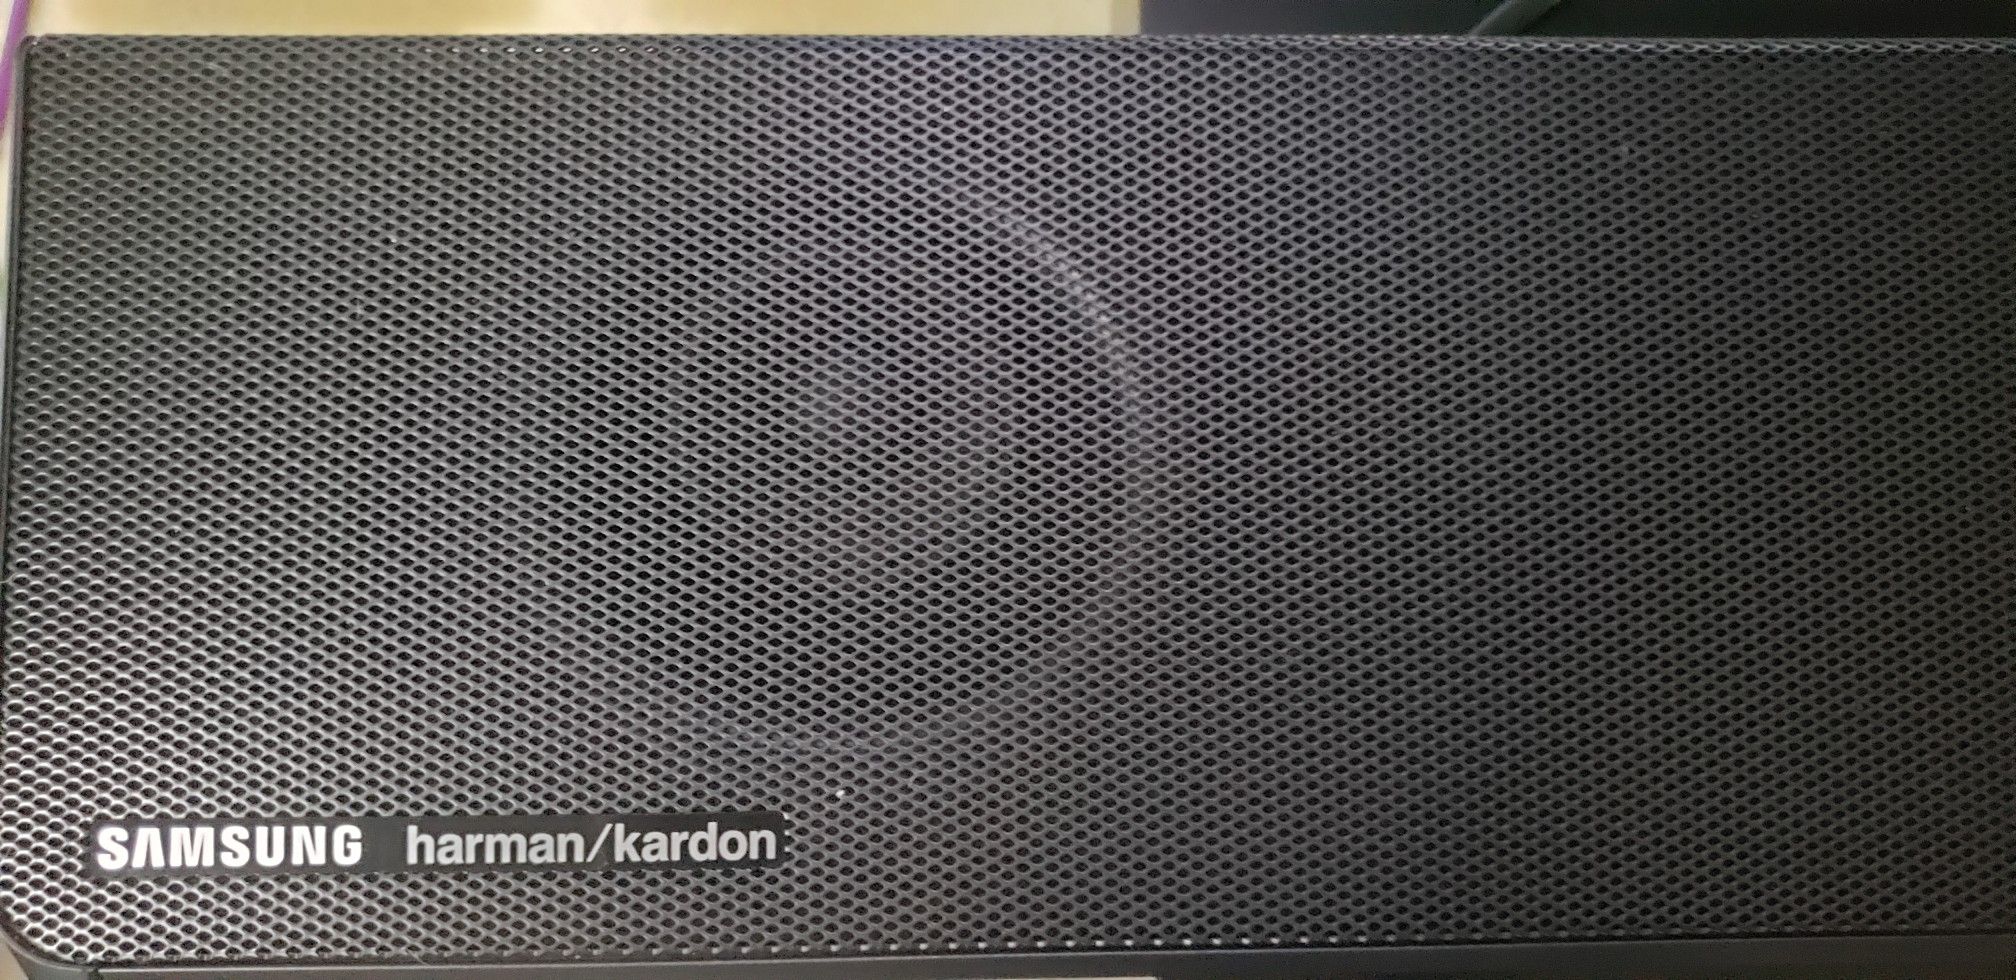 Samsung harman/kardon Soundbar